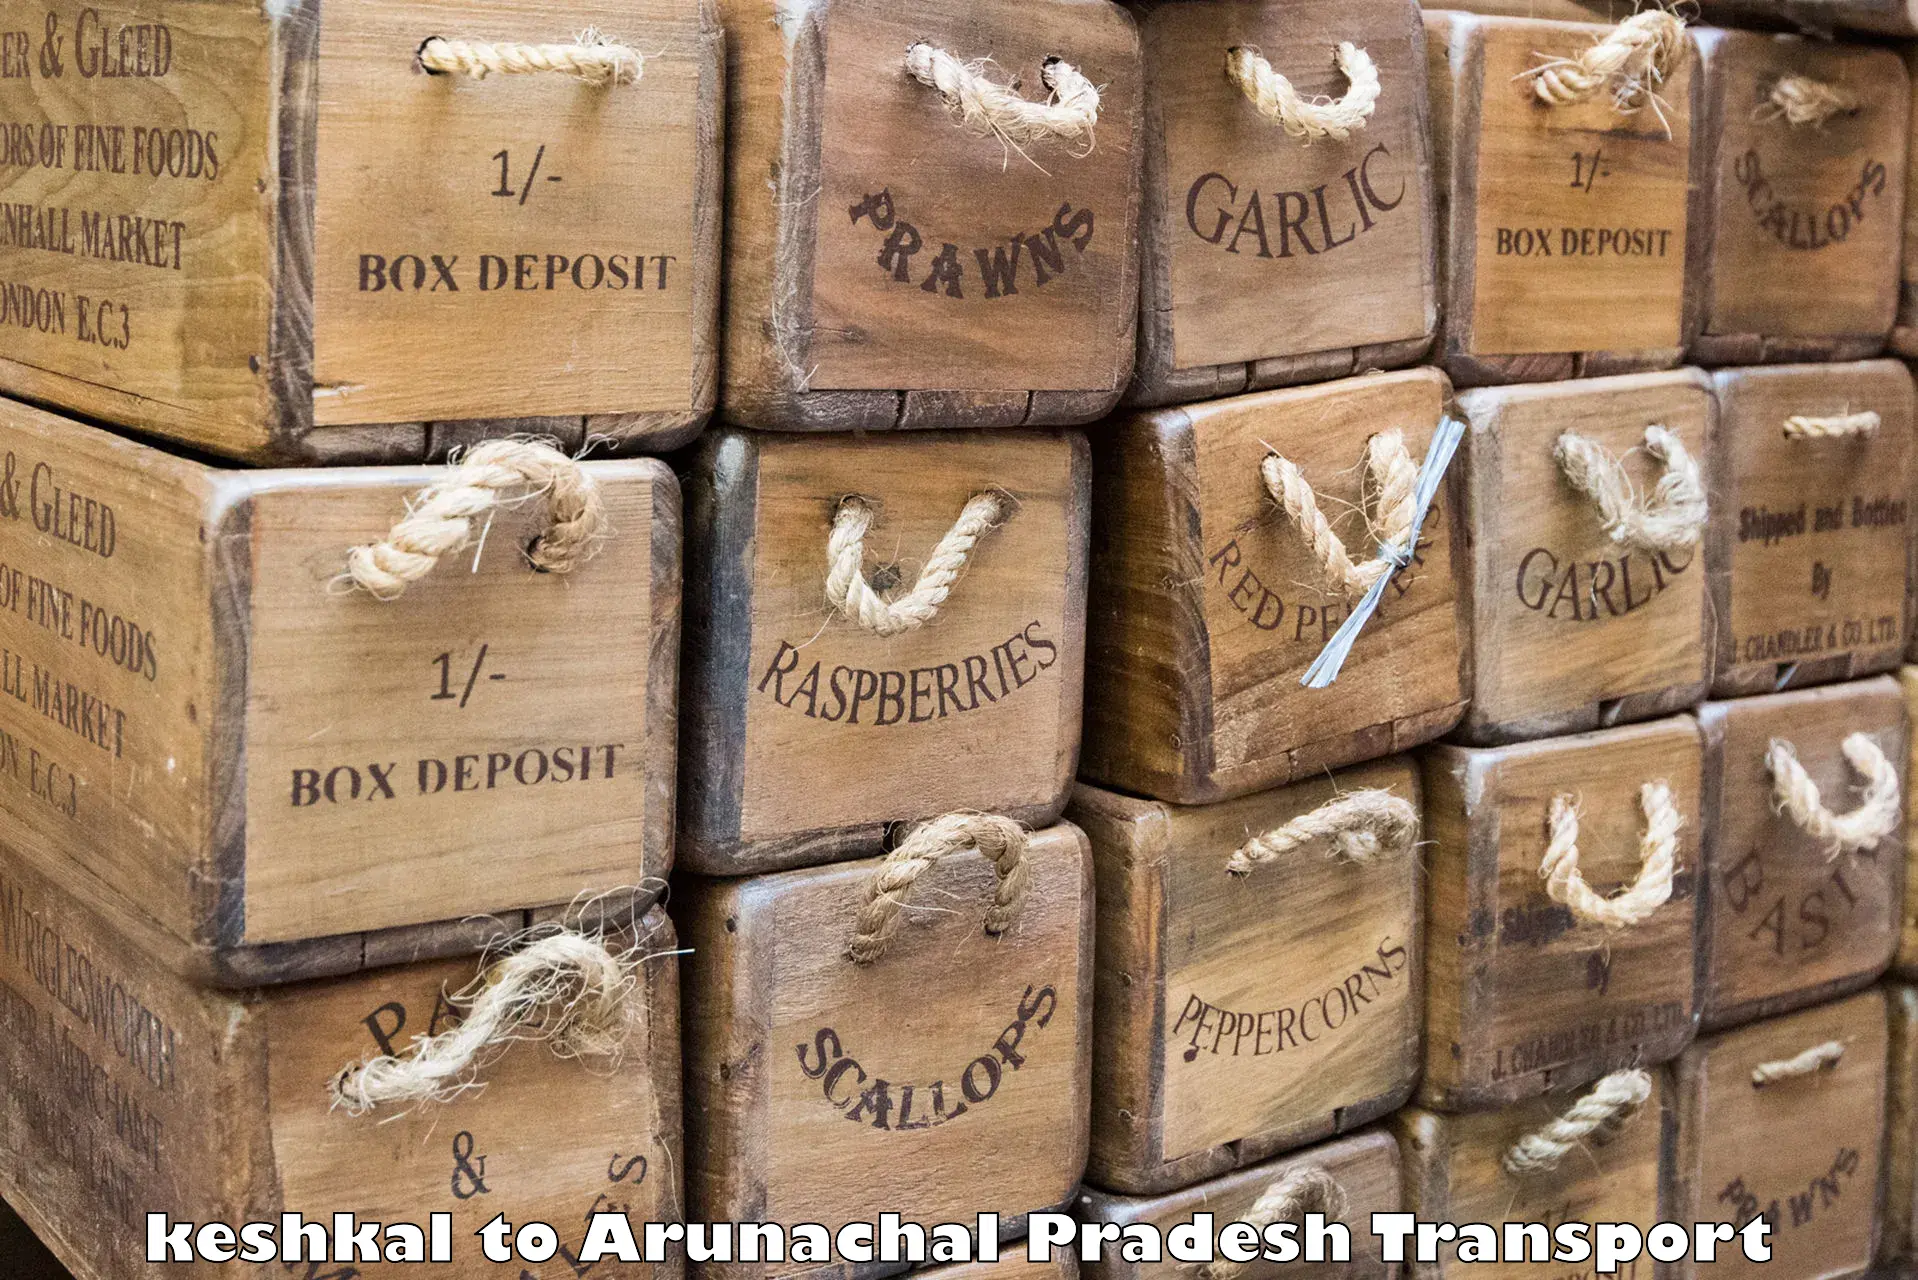 Truck transport companies in India keshkal to Arunachal Pradesh